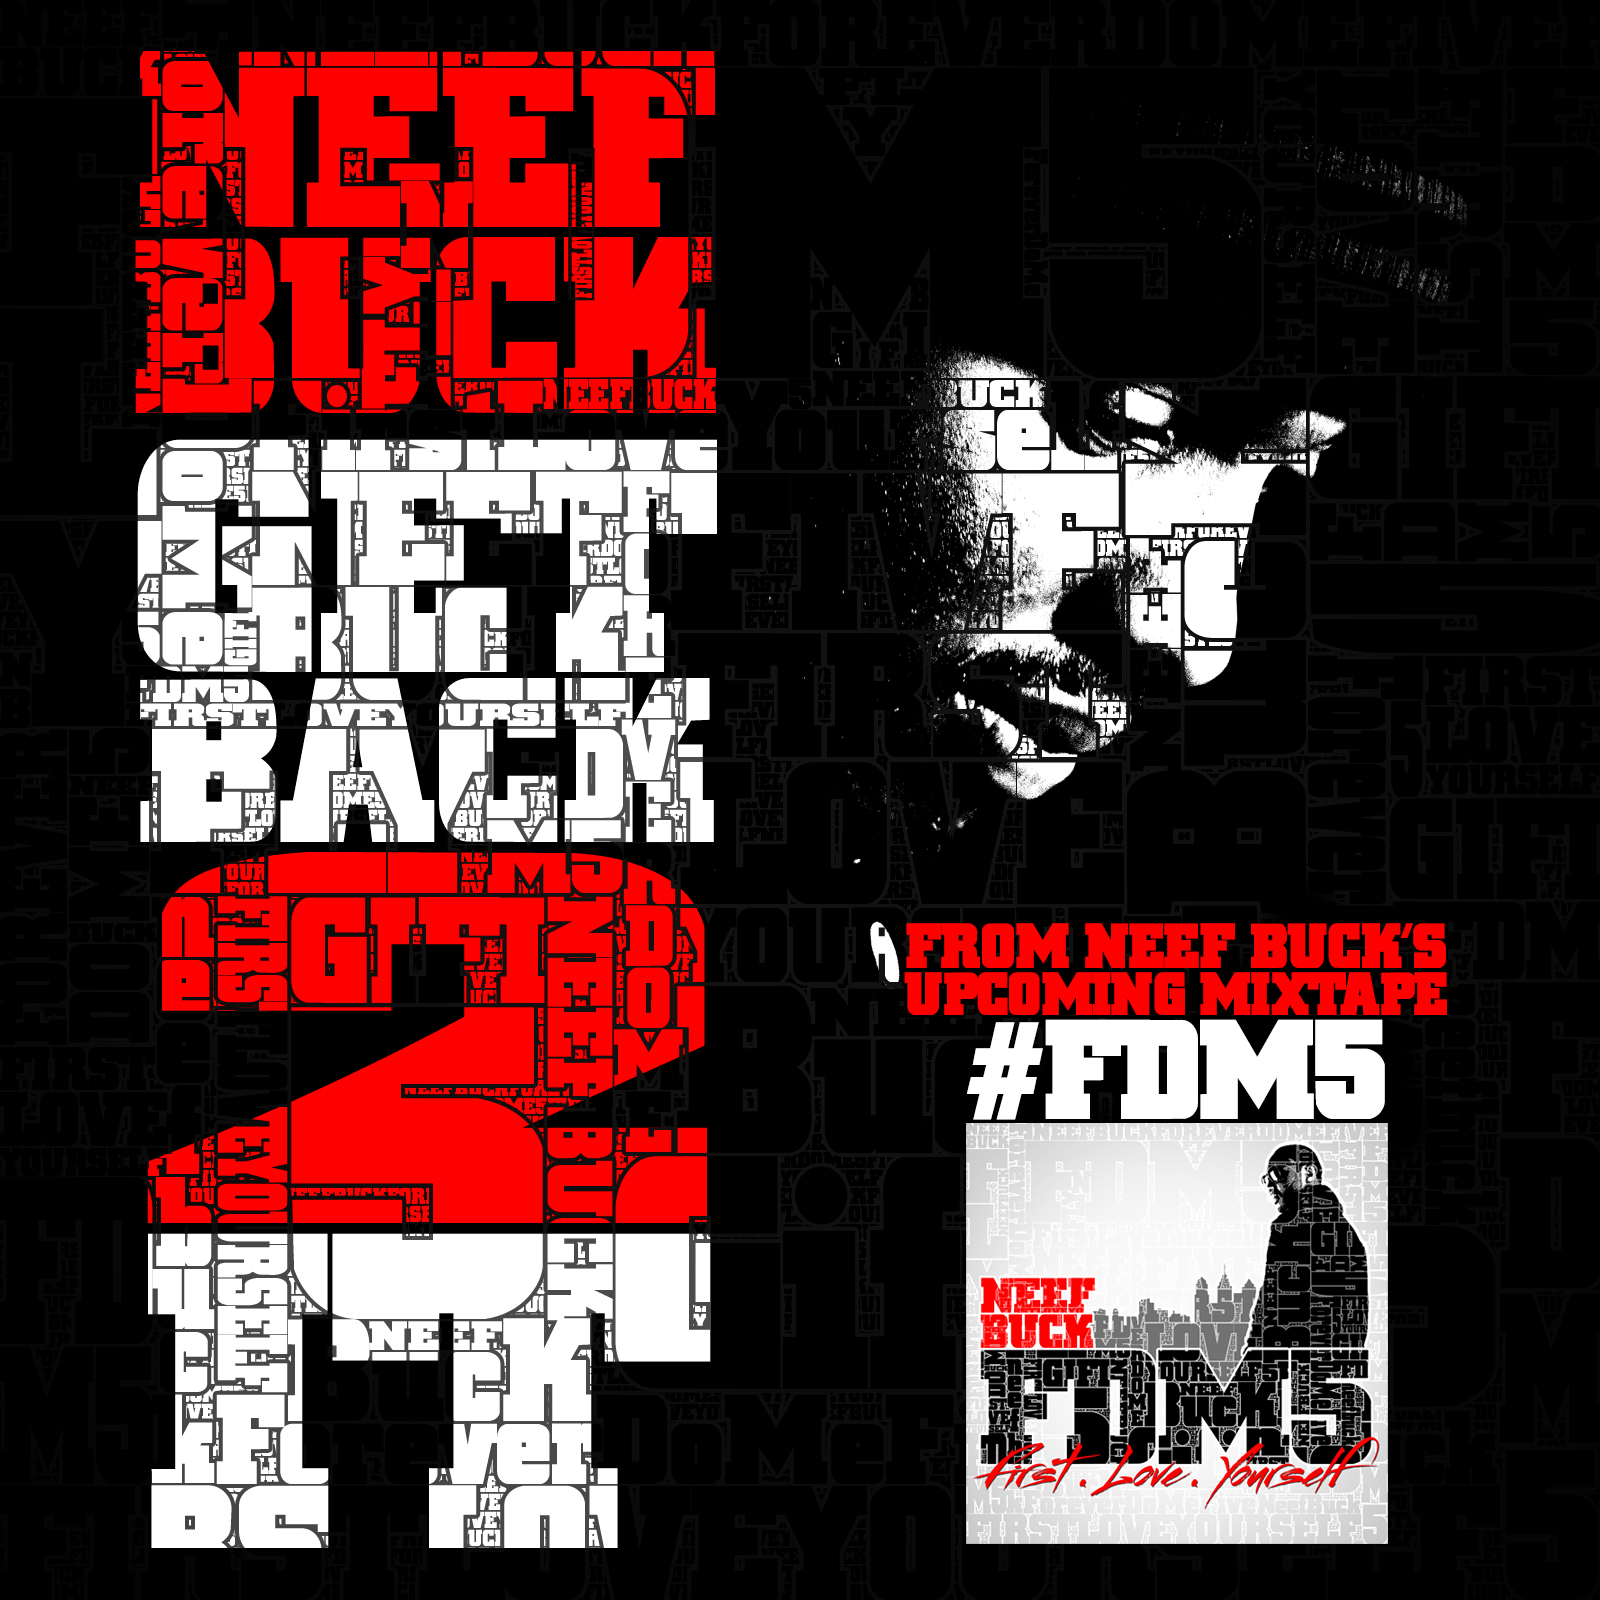 neef-buck-get-back-2-it-prod-by-bobby-johnson-HHS1987-2012 Neef Buck (@Neef_Buck) - Get Back 2 It (Prod by Bobby Johnson)  